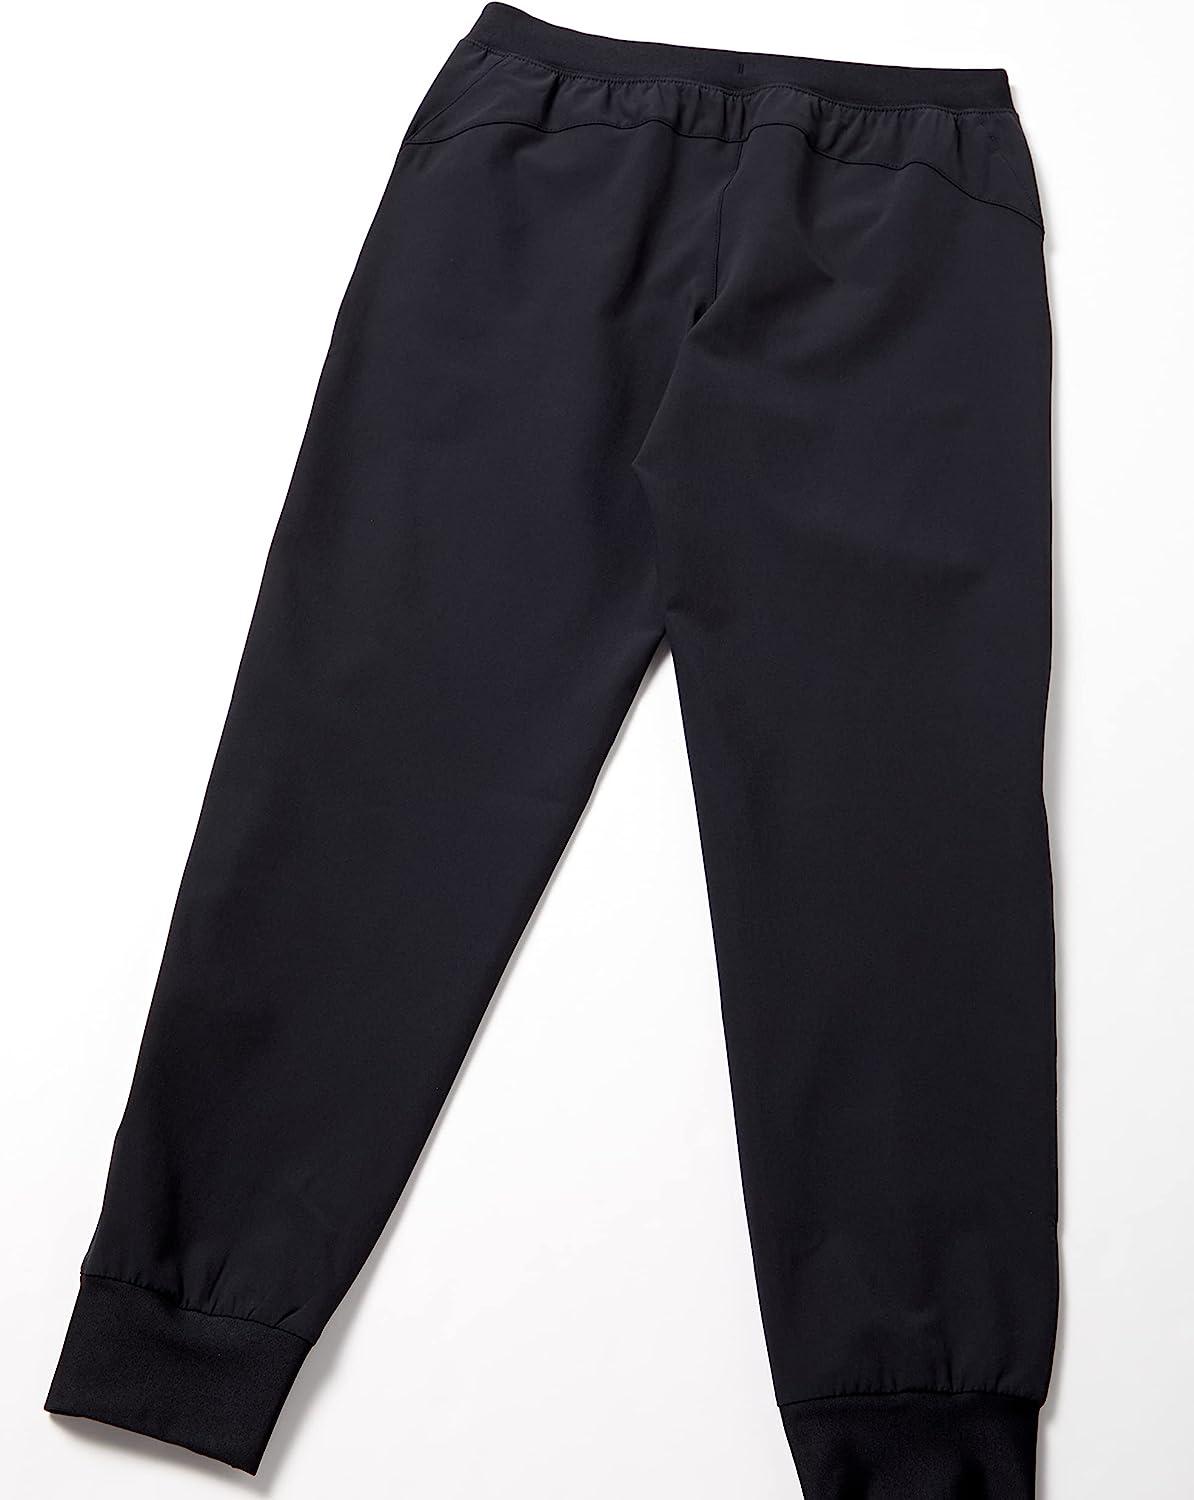 Under Armour Girls Sport Woven Pants Black (001)/Black Large